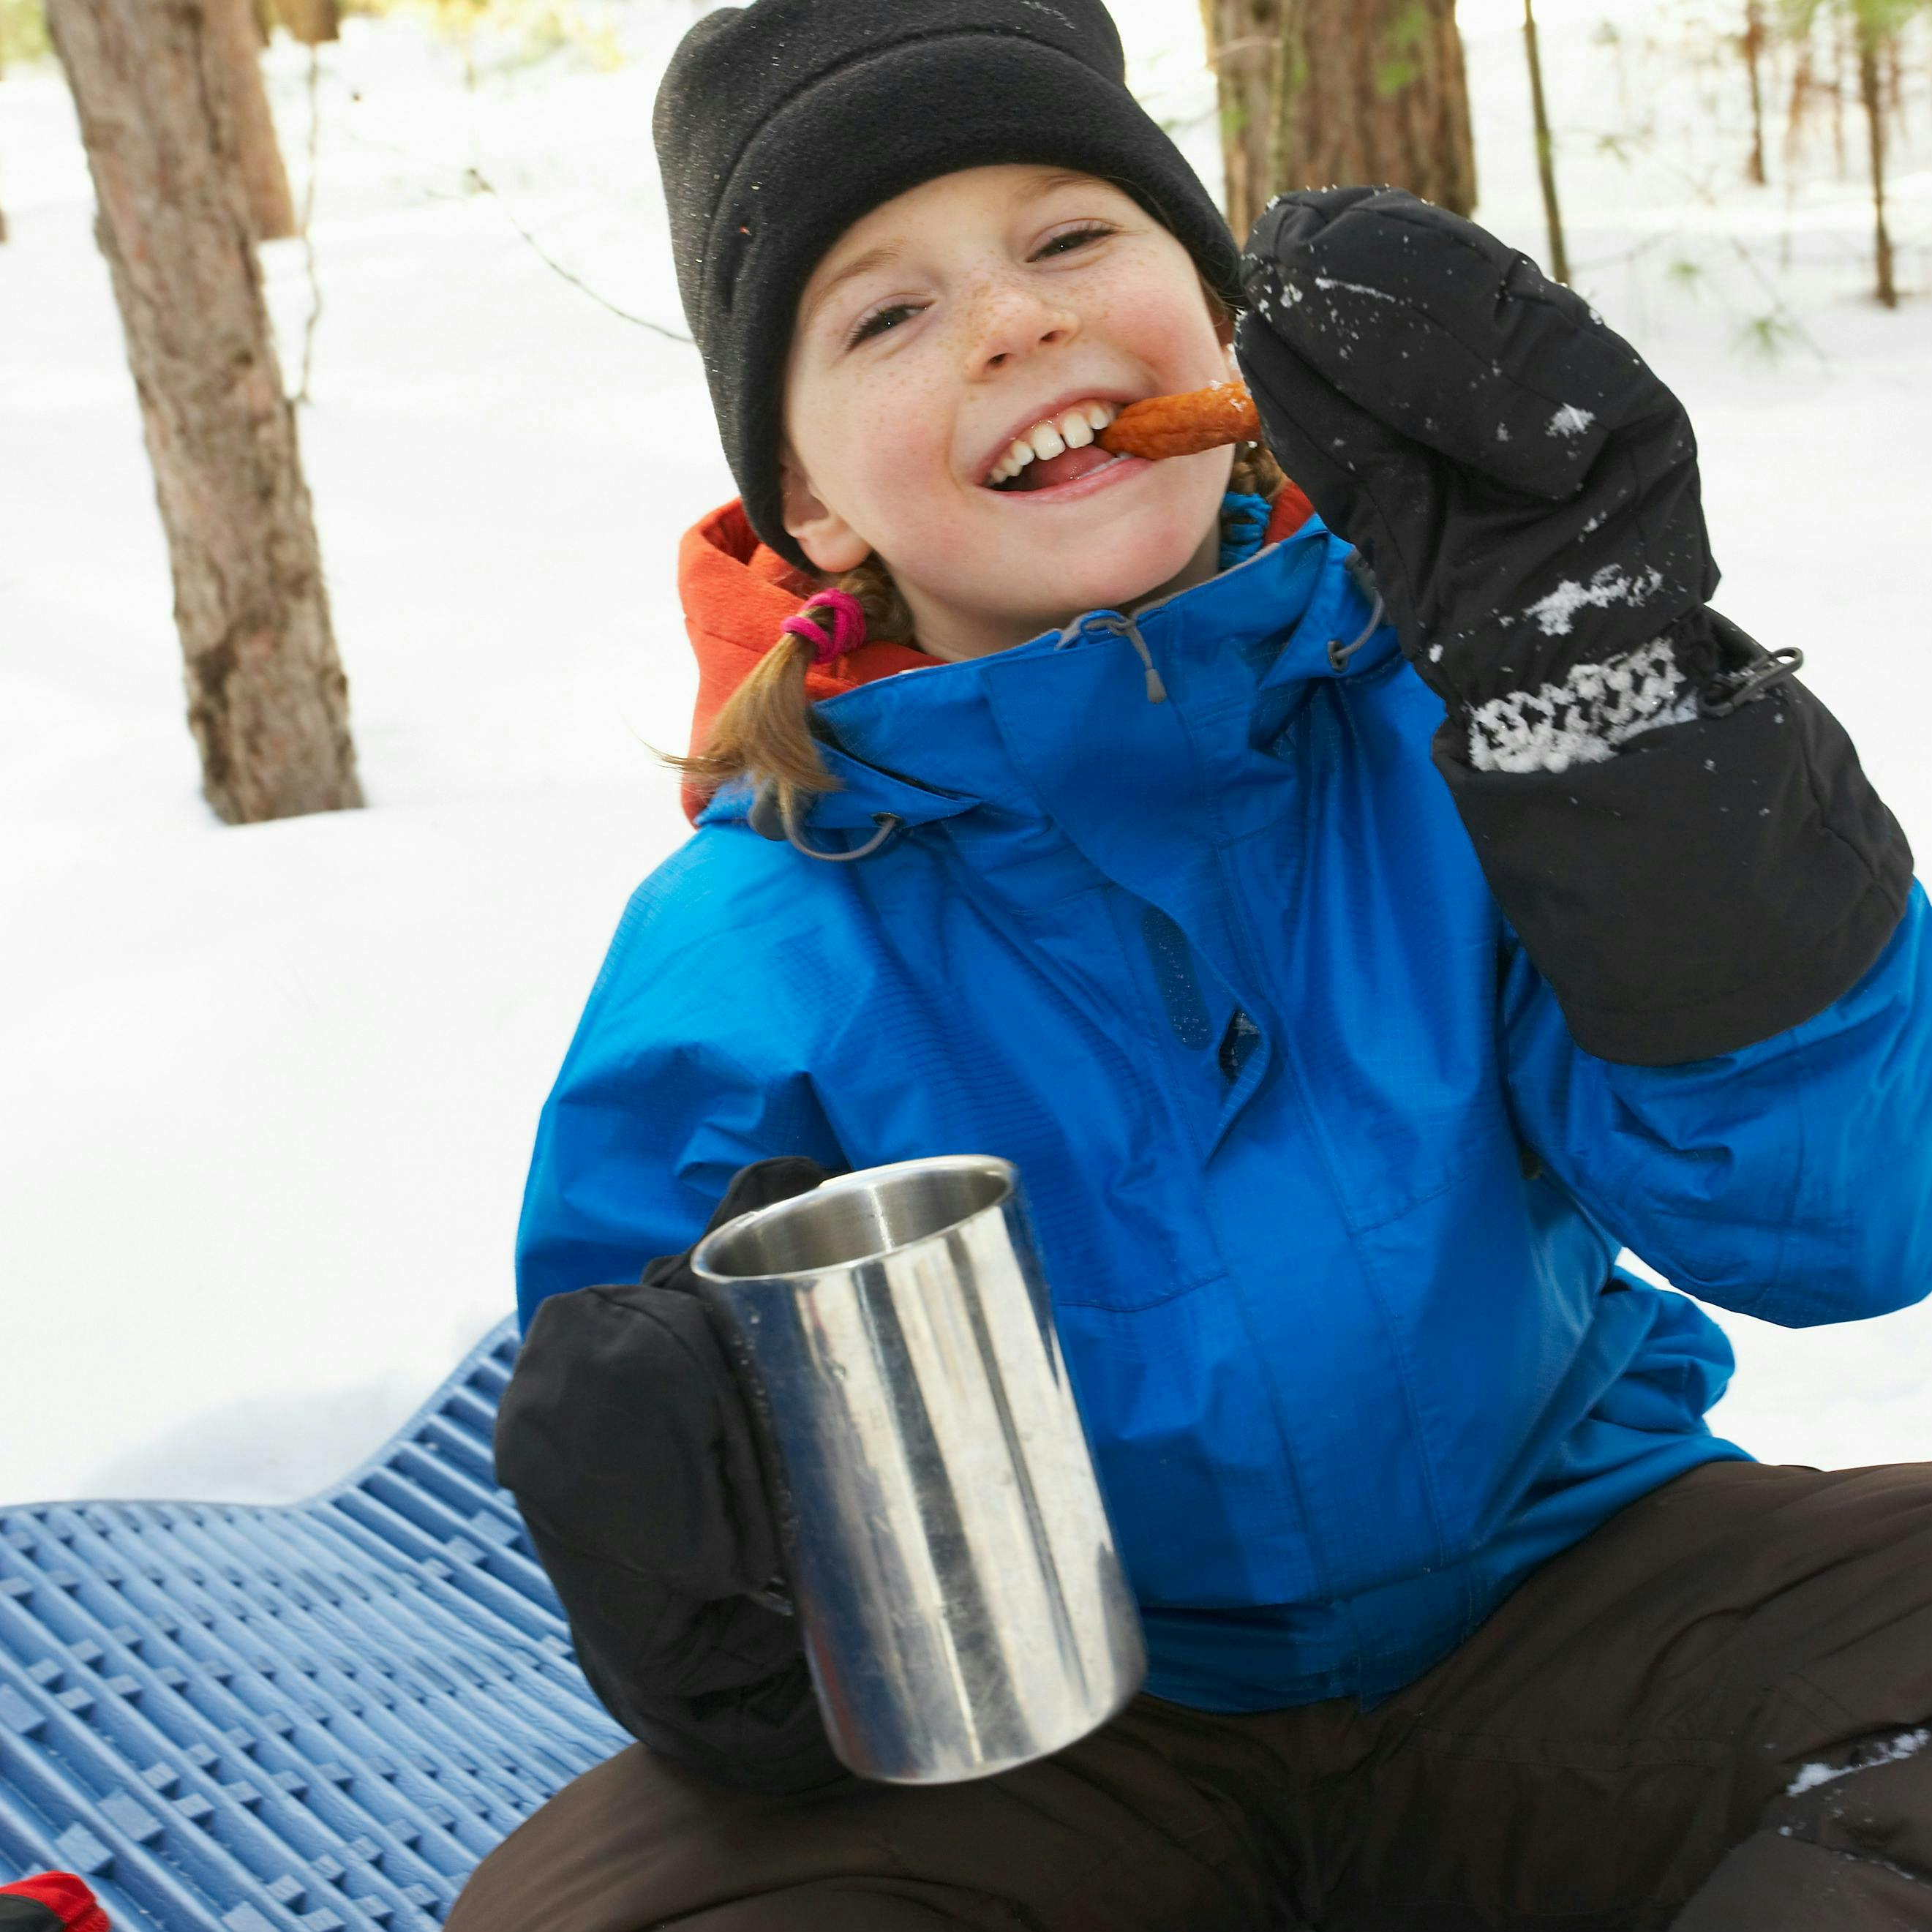 Kid eating snack outside in winter